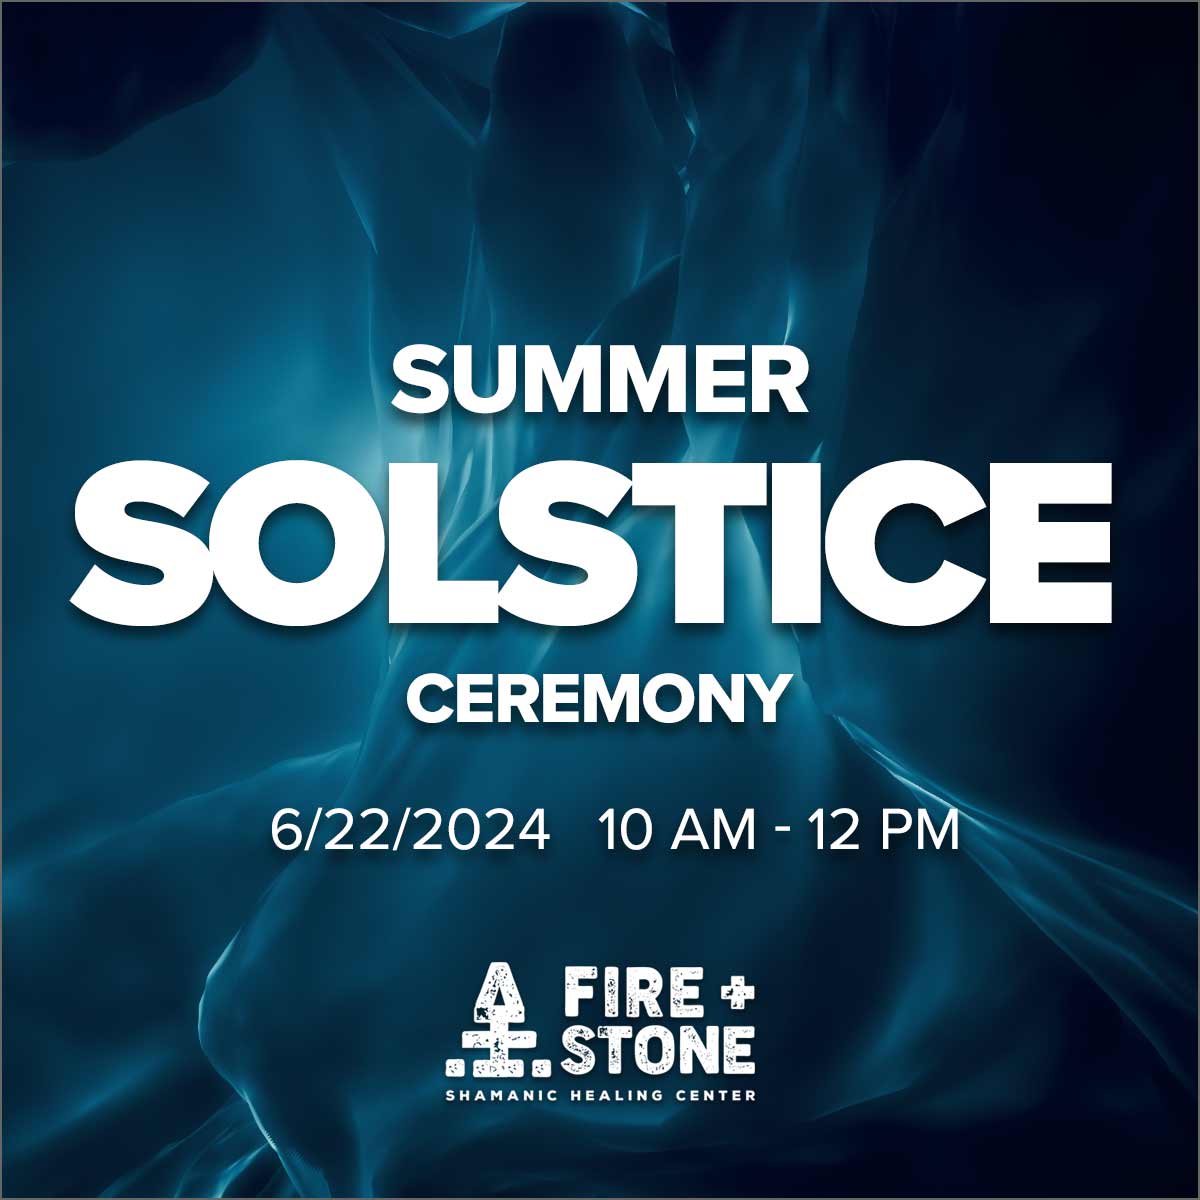 Summer Solstice Ceremony